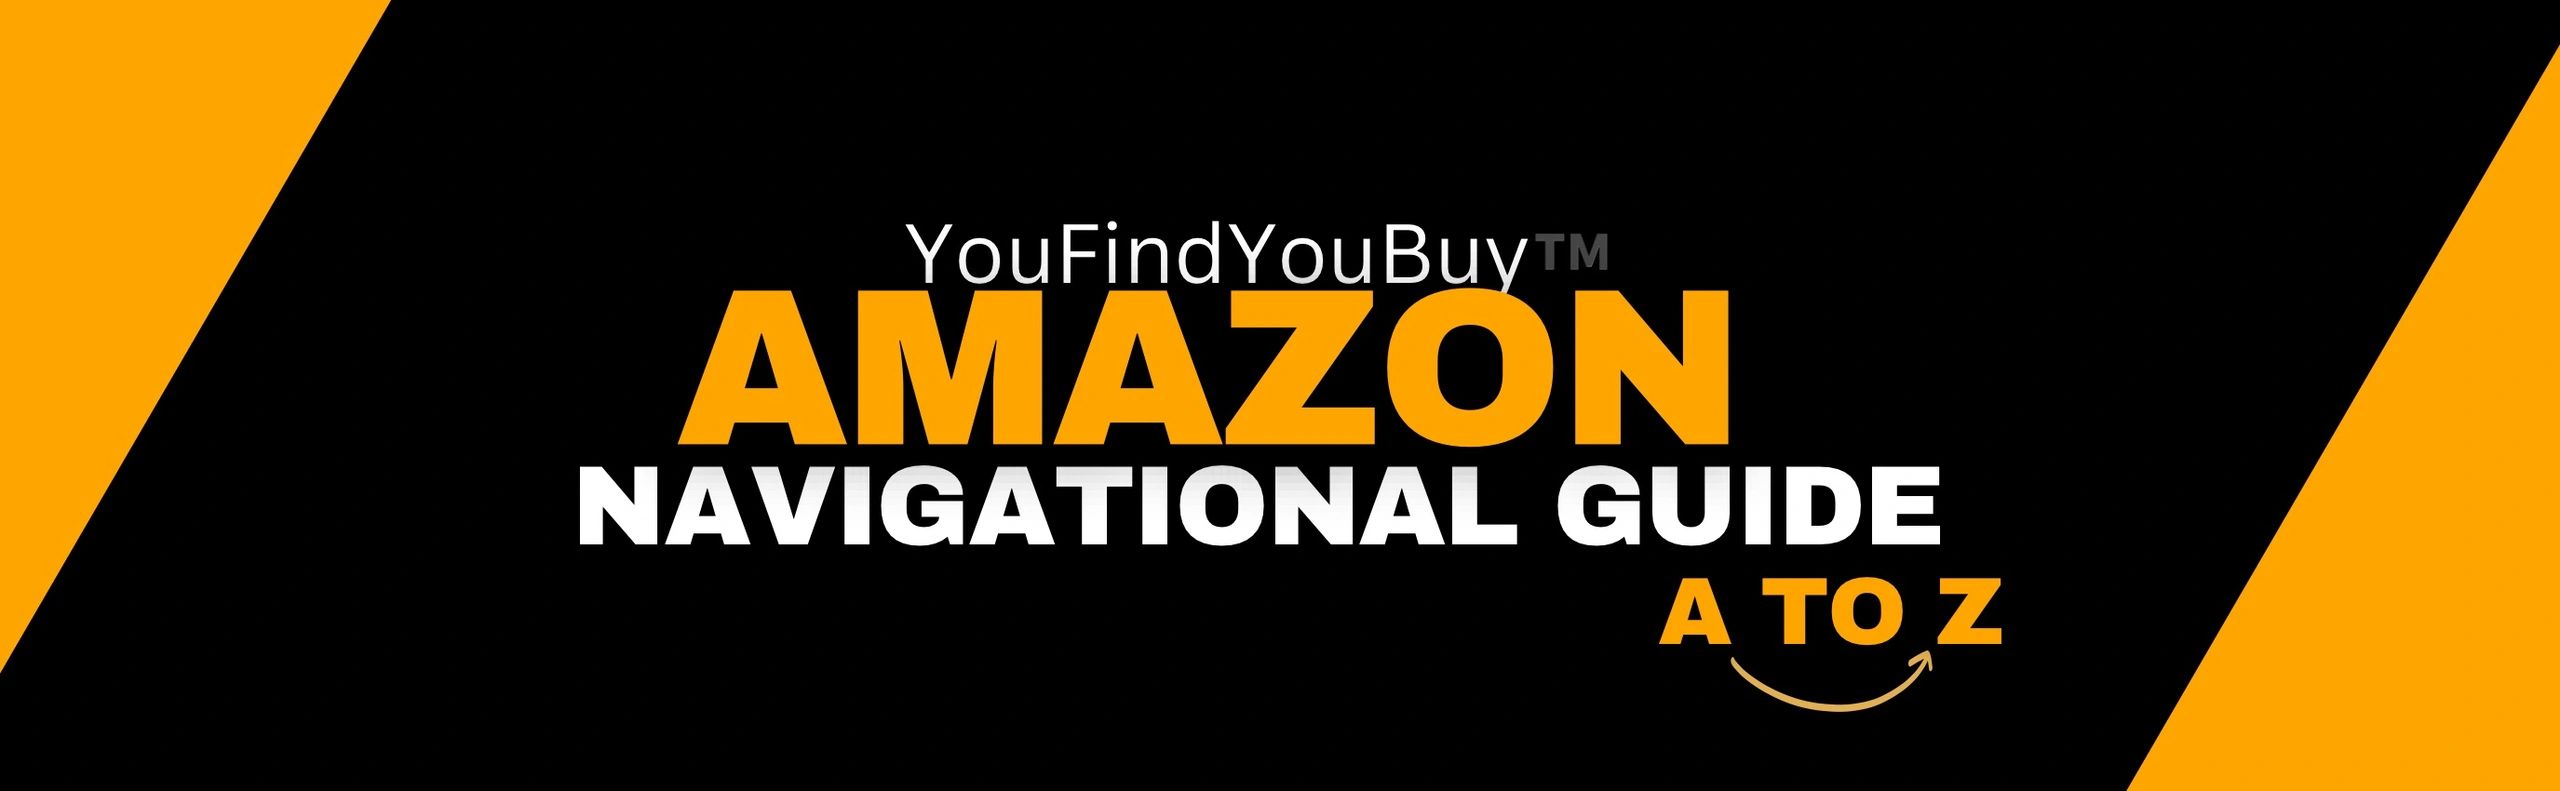 Amazon.com Navigational Guide